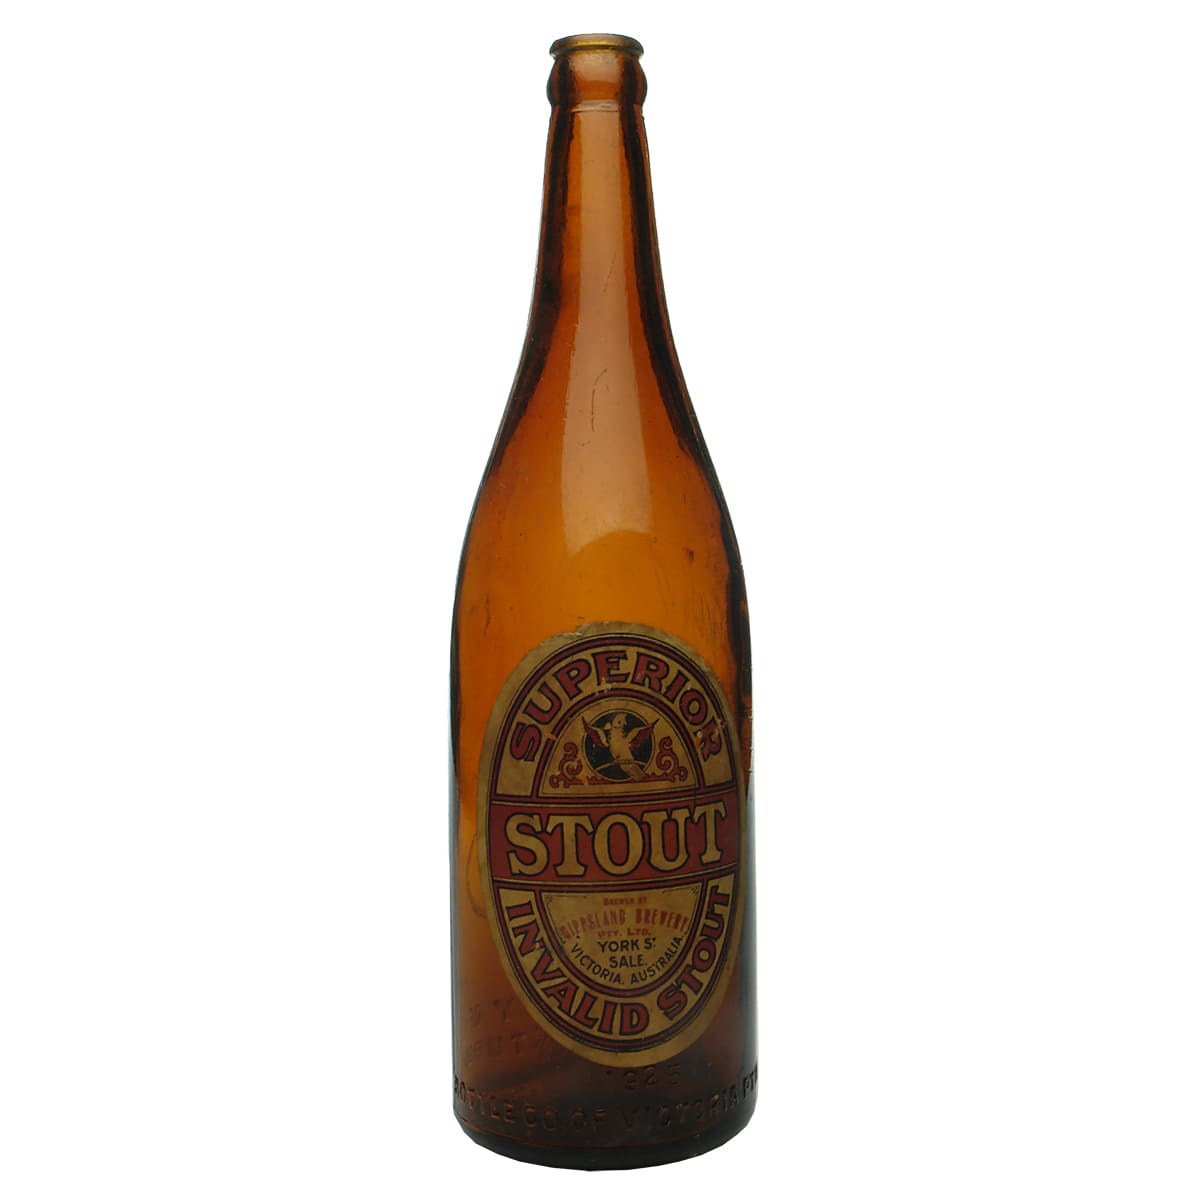 Beer. M. B. C. V. Gippsland Brewery Invalid Stout Label, York Street, Sale. Crown Seal. Amber. 26 oz. (Victoria)